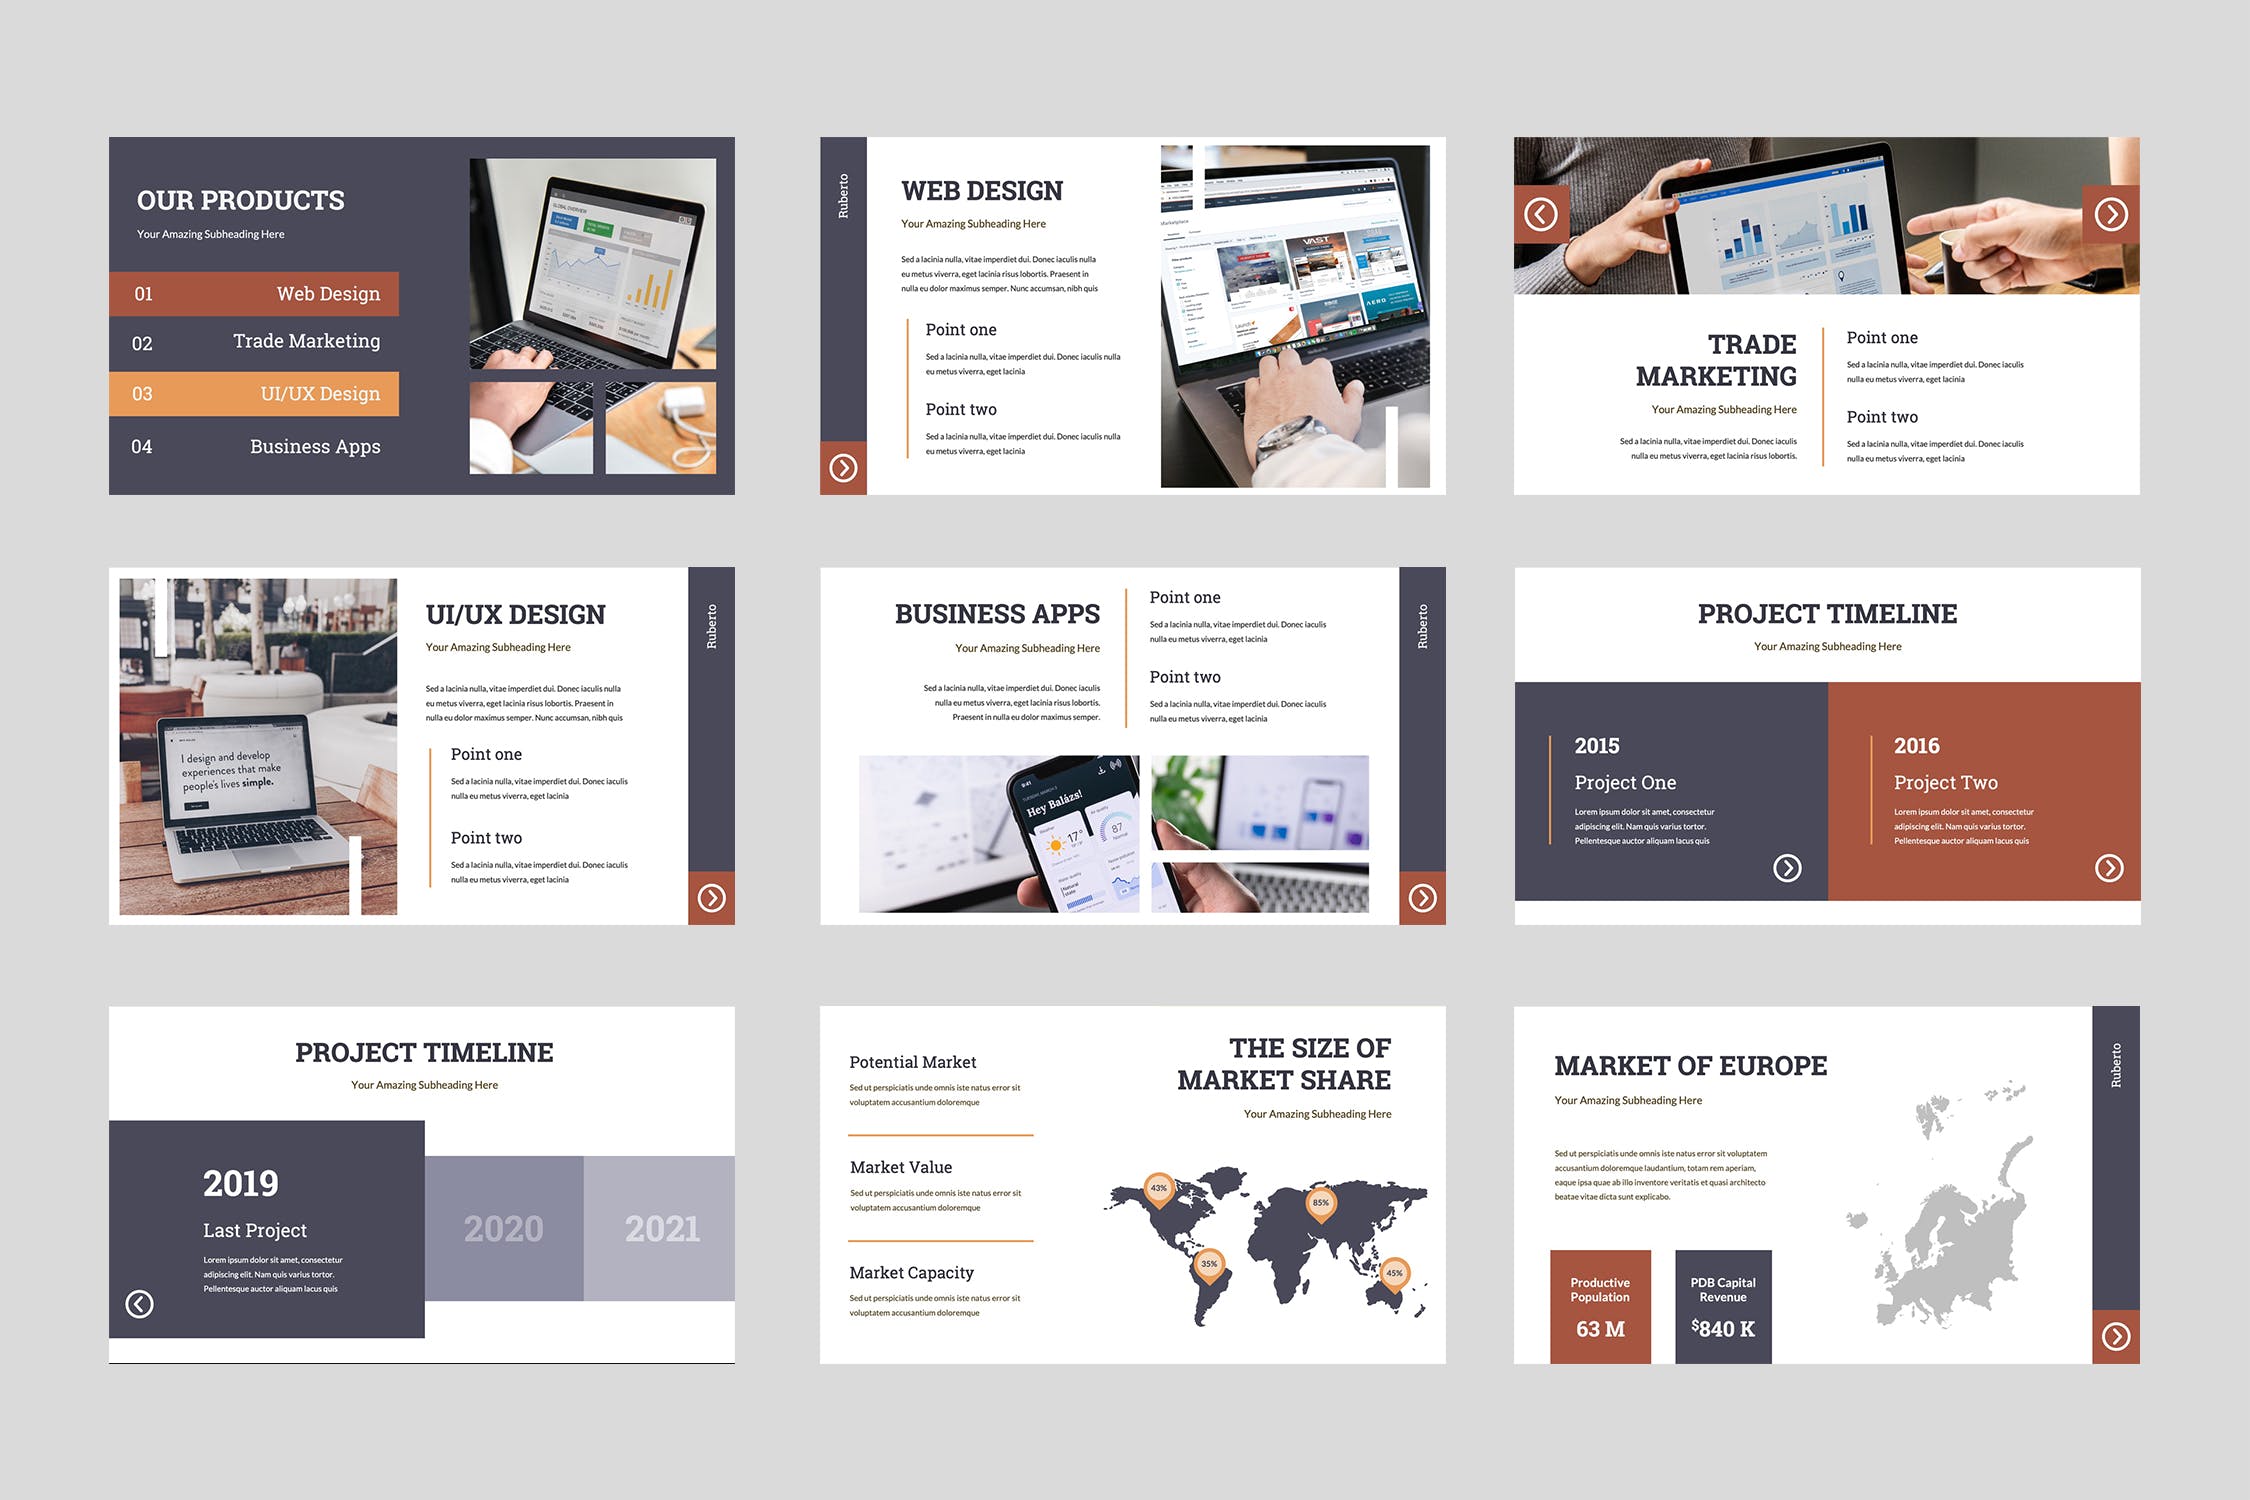 高端大气企业商务主题PPT模板下载 Goodear – Business Powerpoint Presentation插图(3)